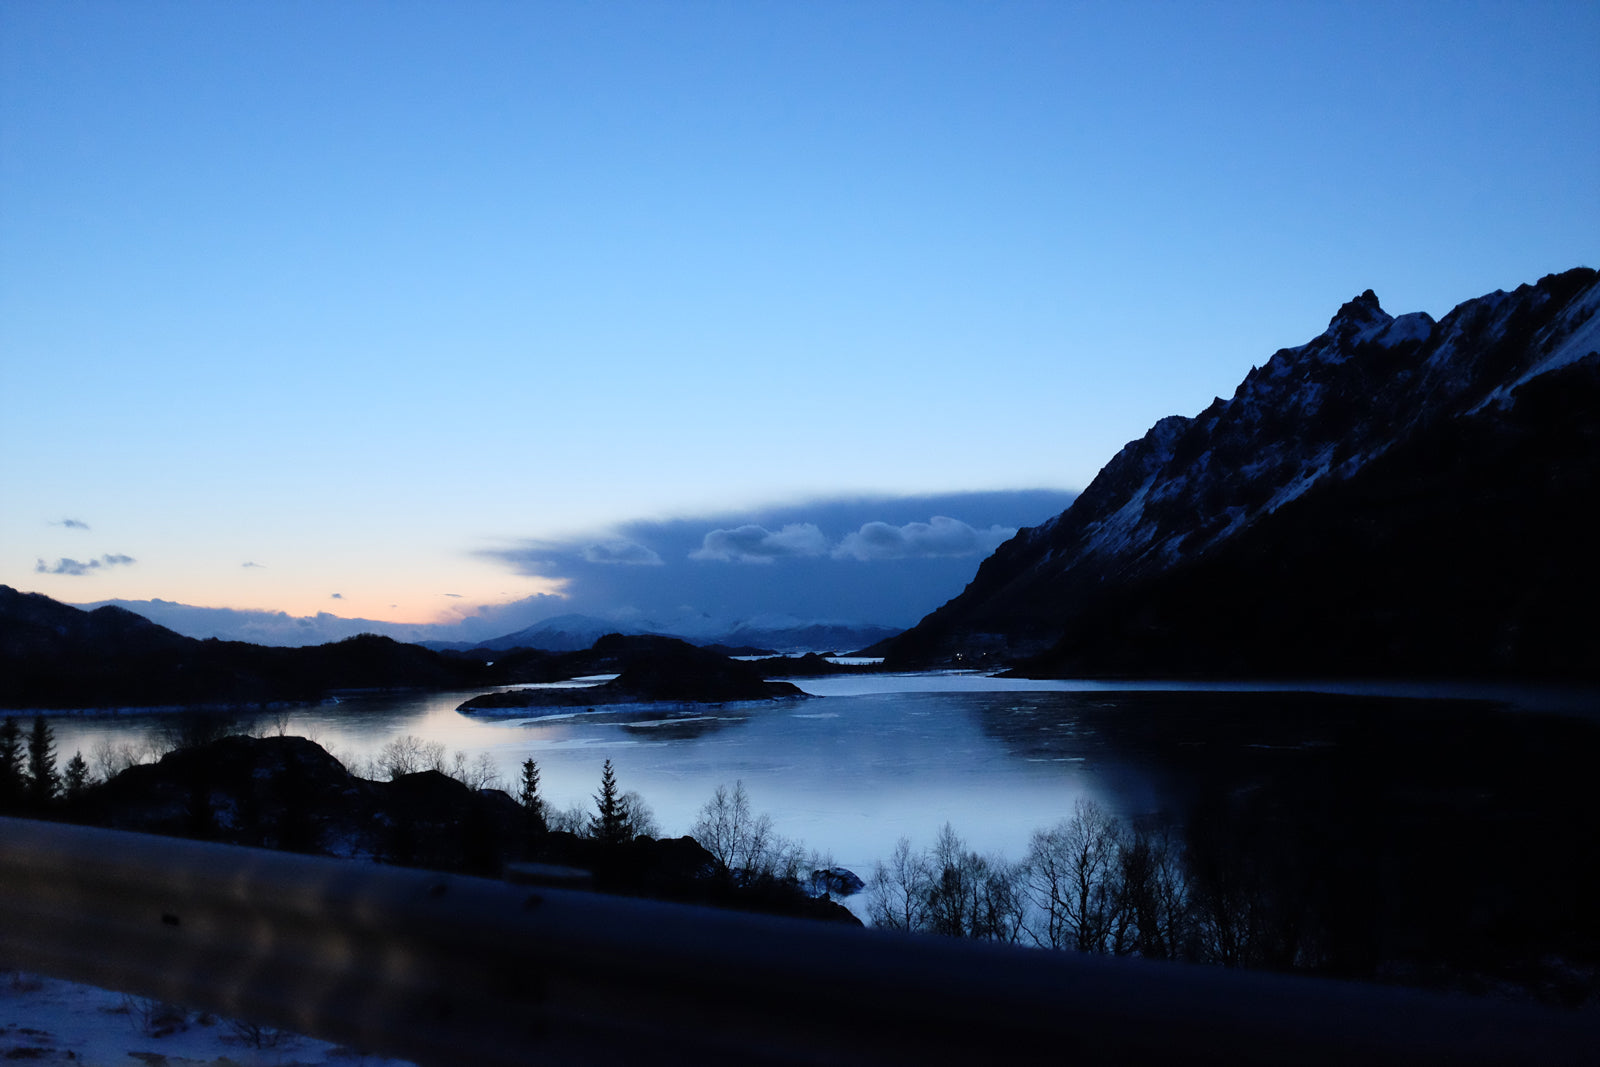 Mission Workshop Fälttest : ESCAPE NORTH - En resa genom polcirkeln - Finland, Norge, Sverige - 24 timmars bilresa. Foton av Janne och Samu Amunet